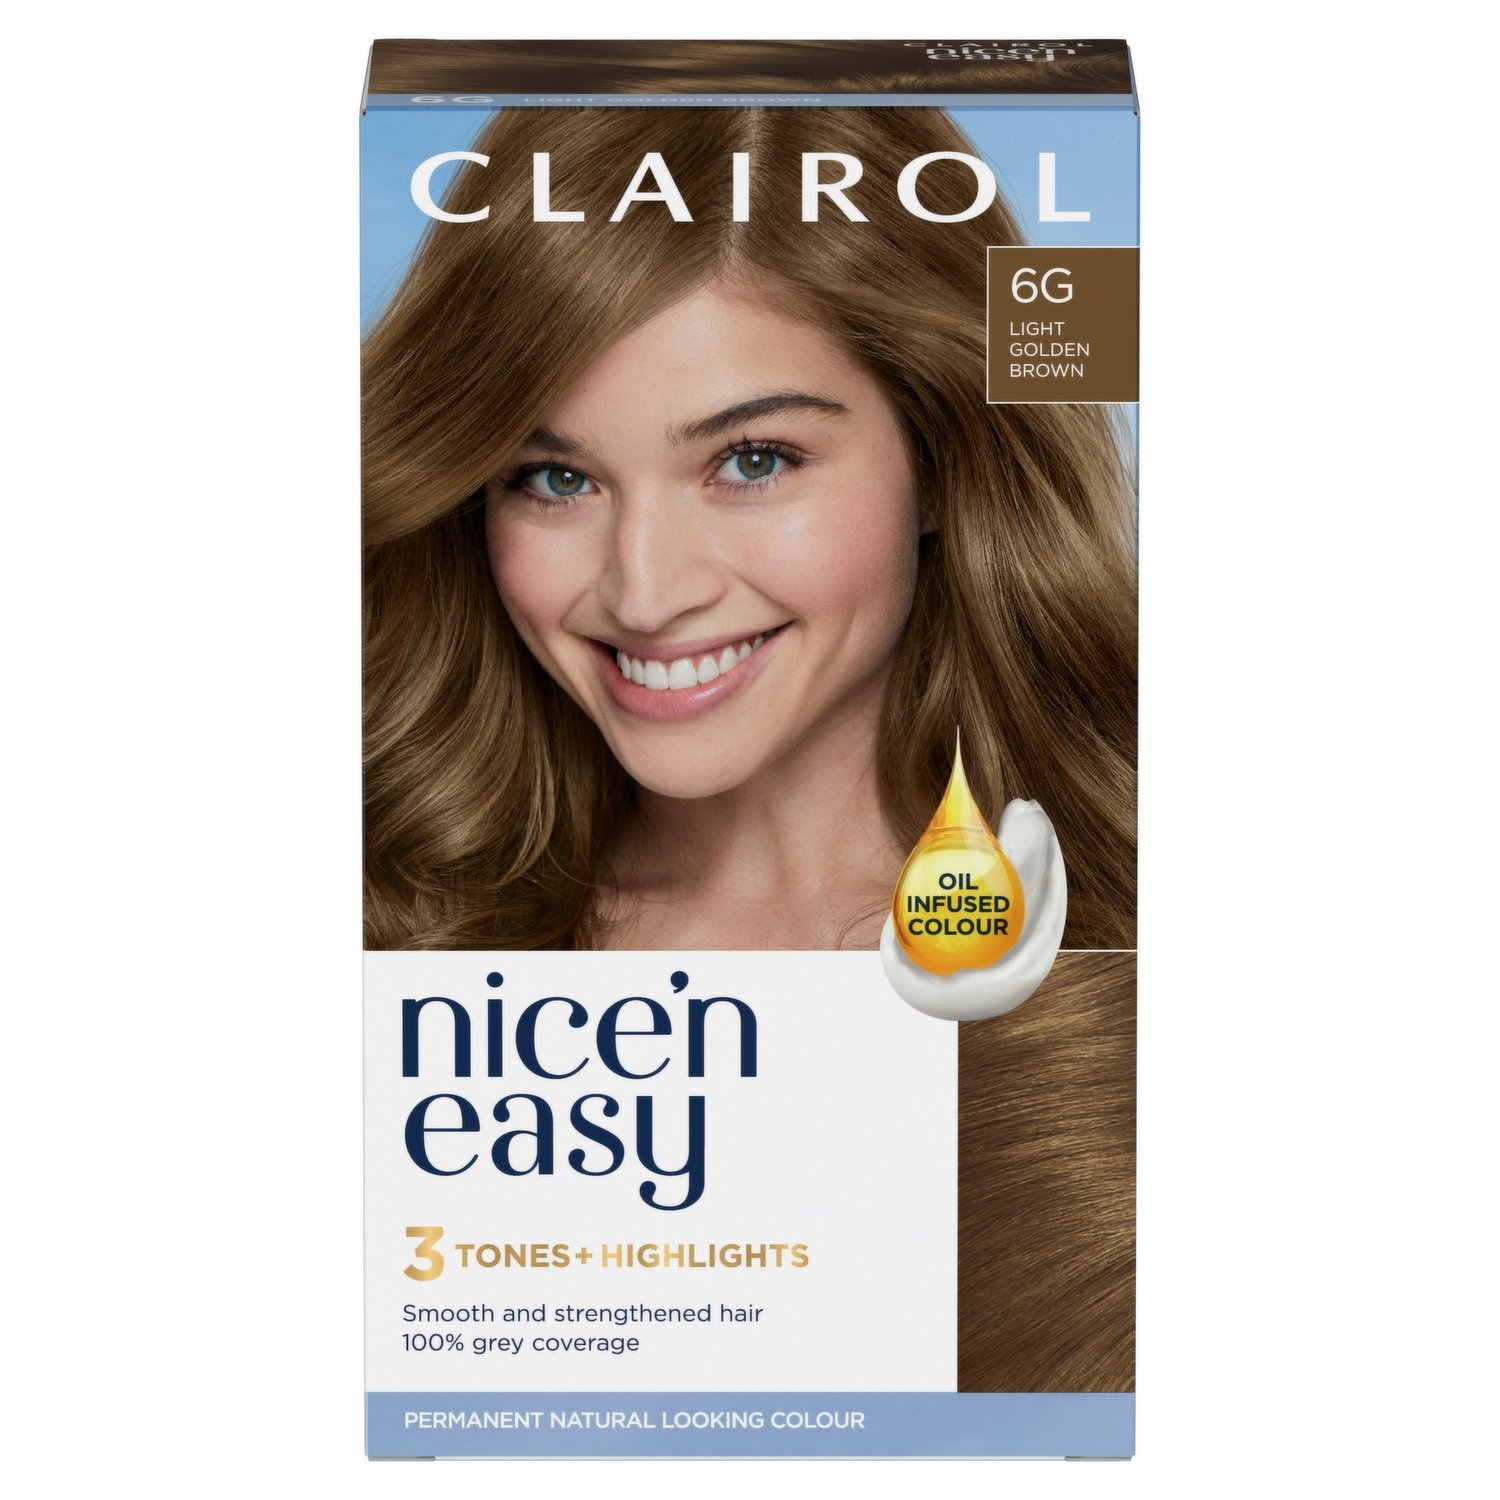 Clairol Nice'n Easy Hair Dye, 6G Light Golden Brown